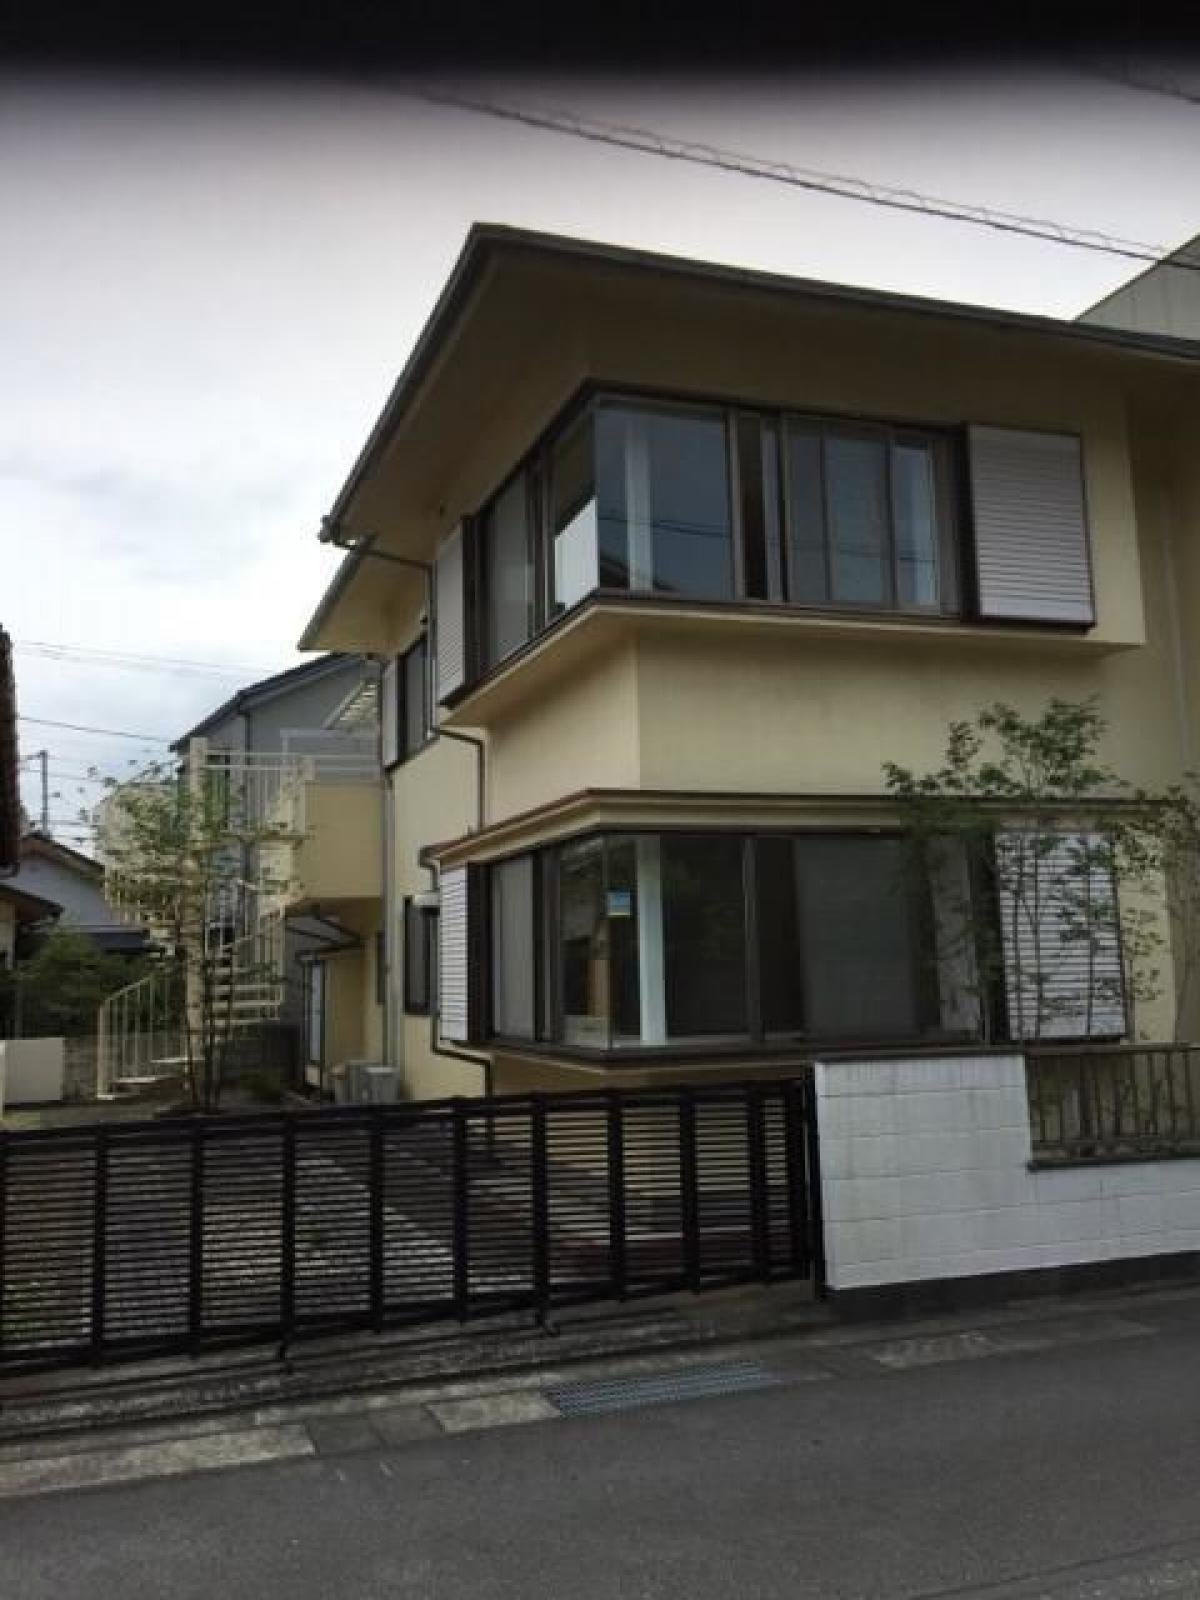 Picture of Home For Sale in Fuji Shi, Shizuoka, Japan